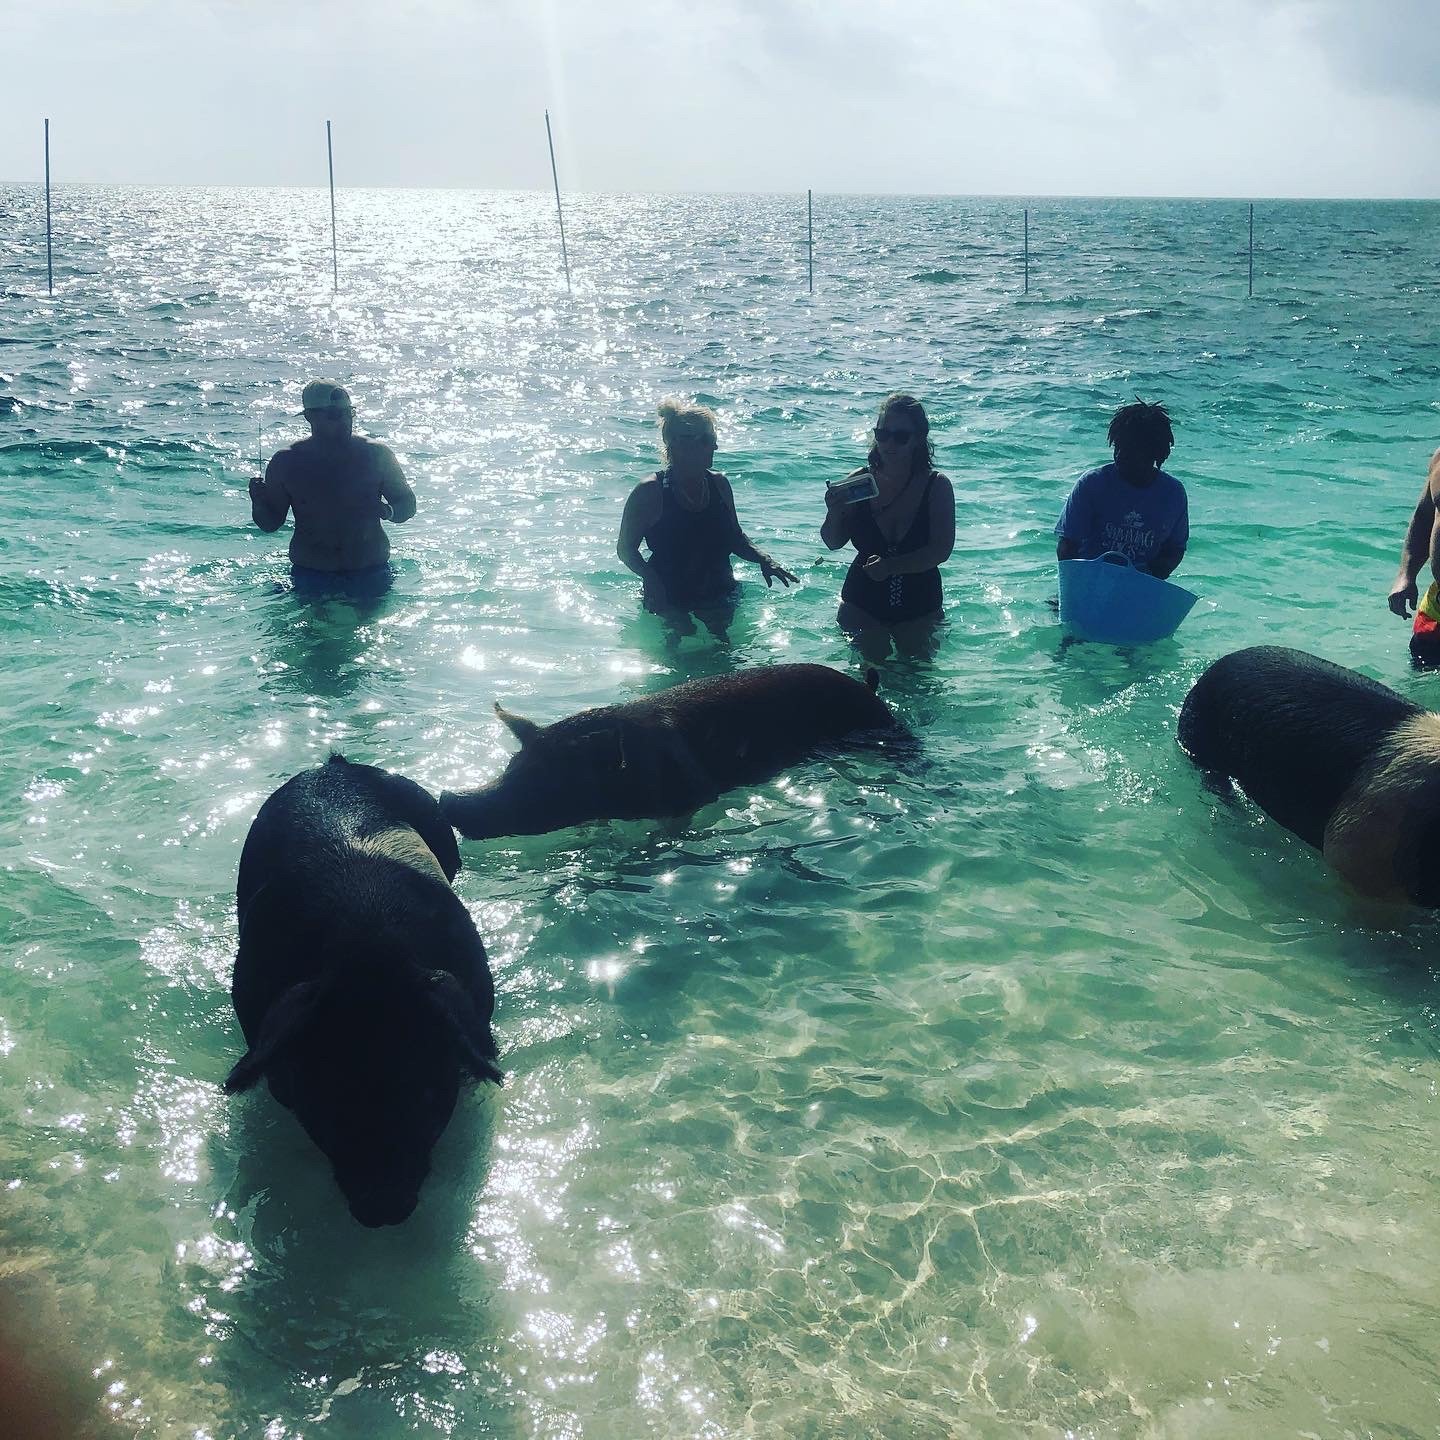 swimming pigs tour royal caribbean